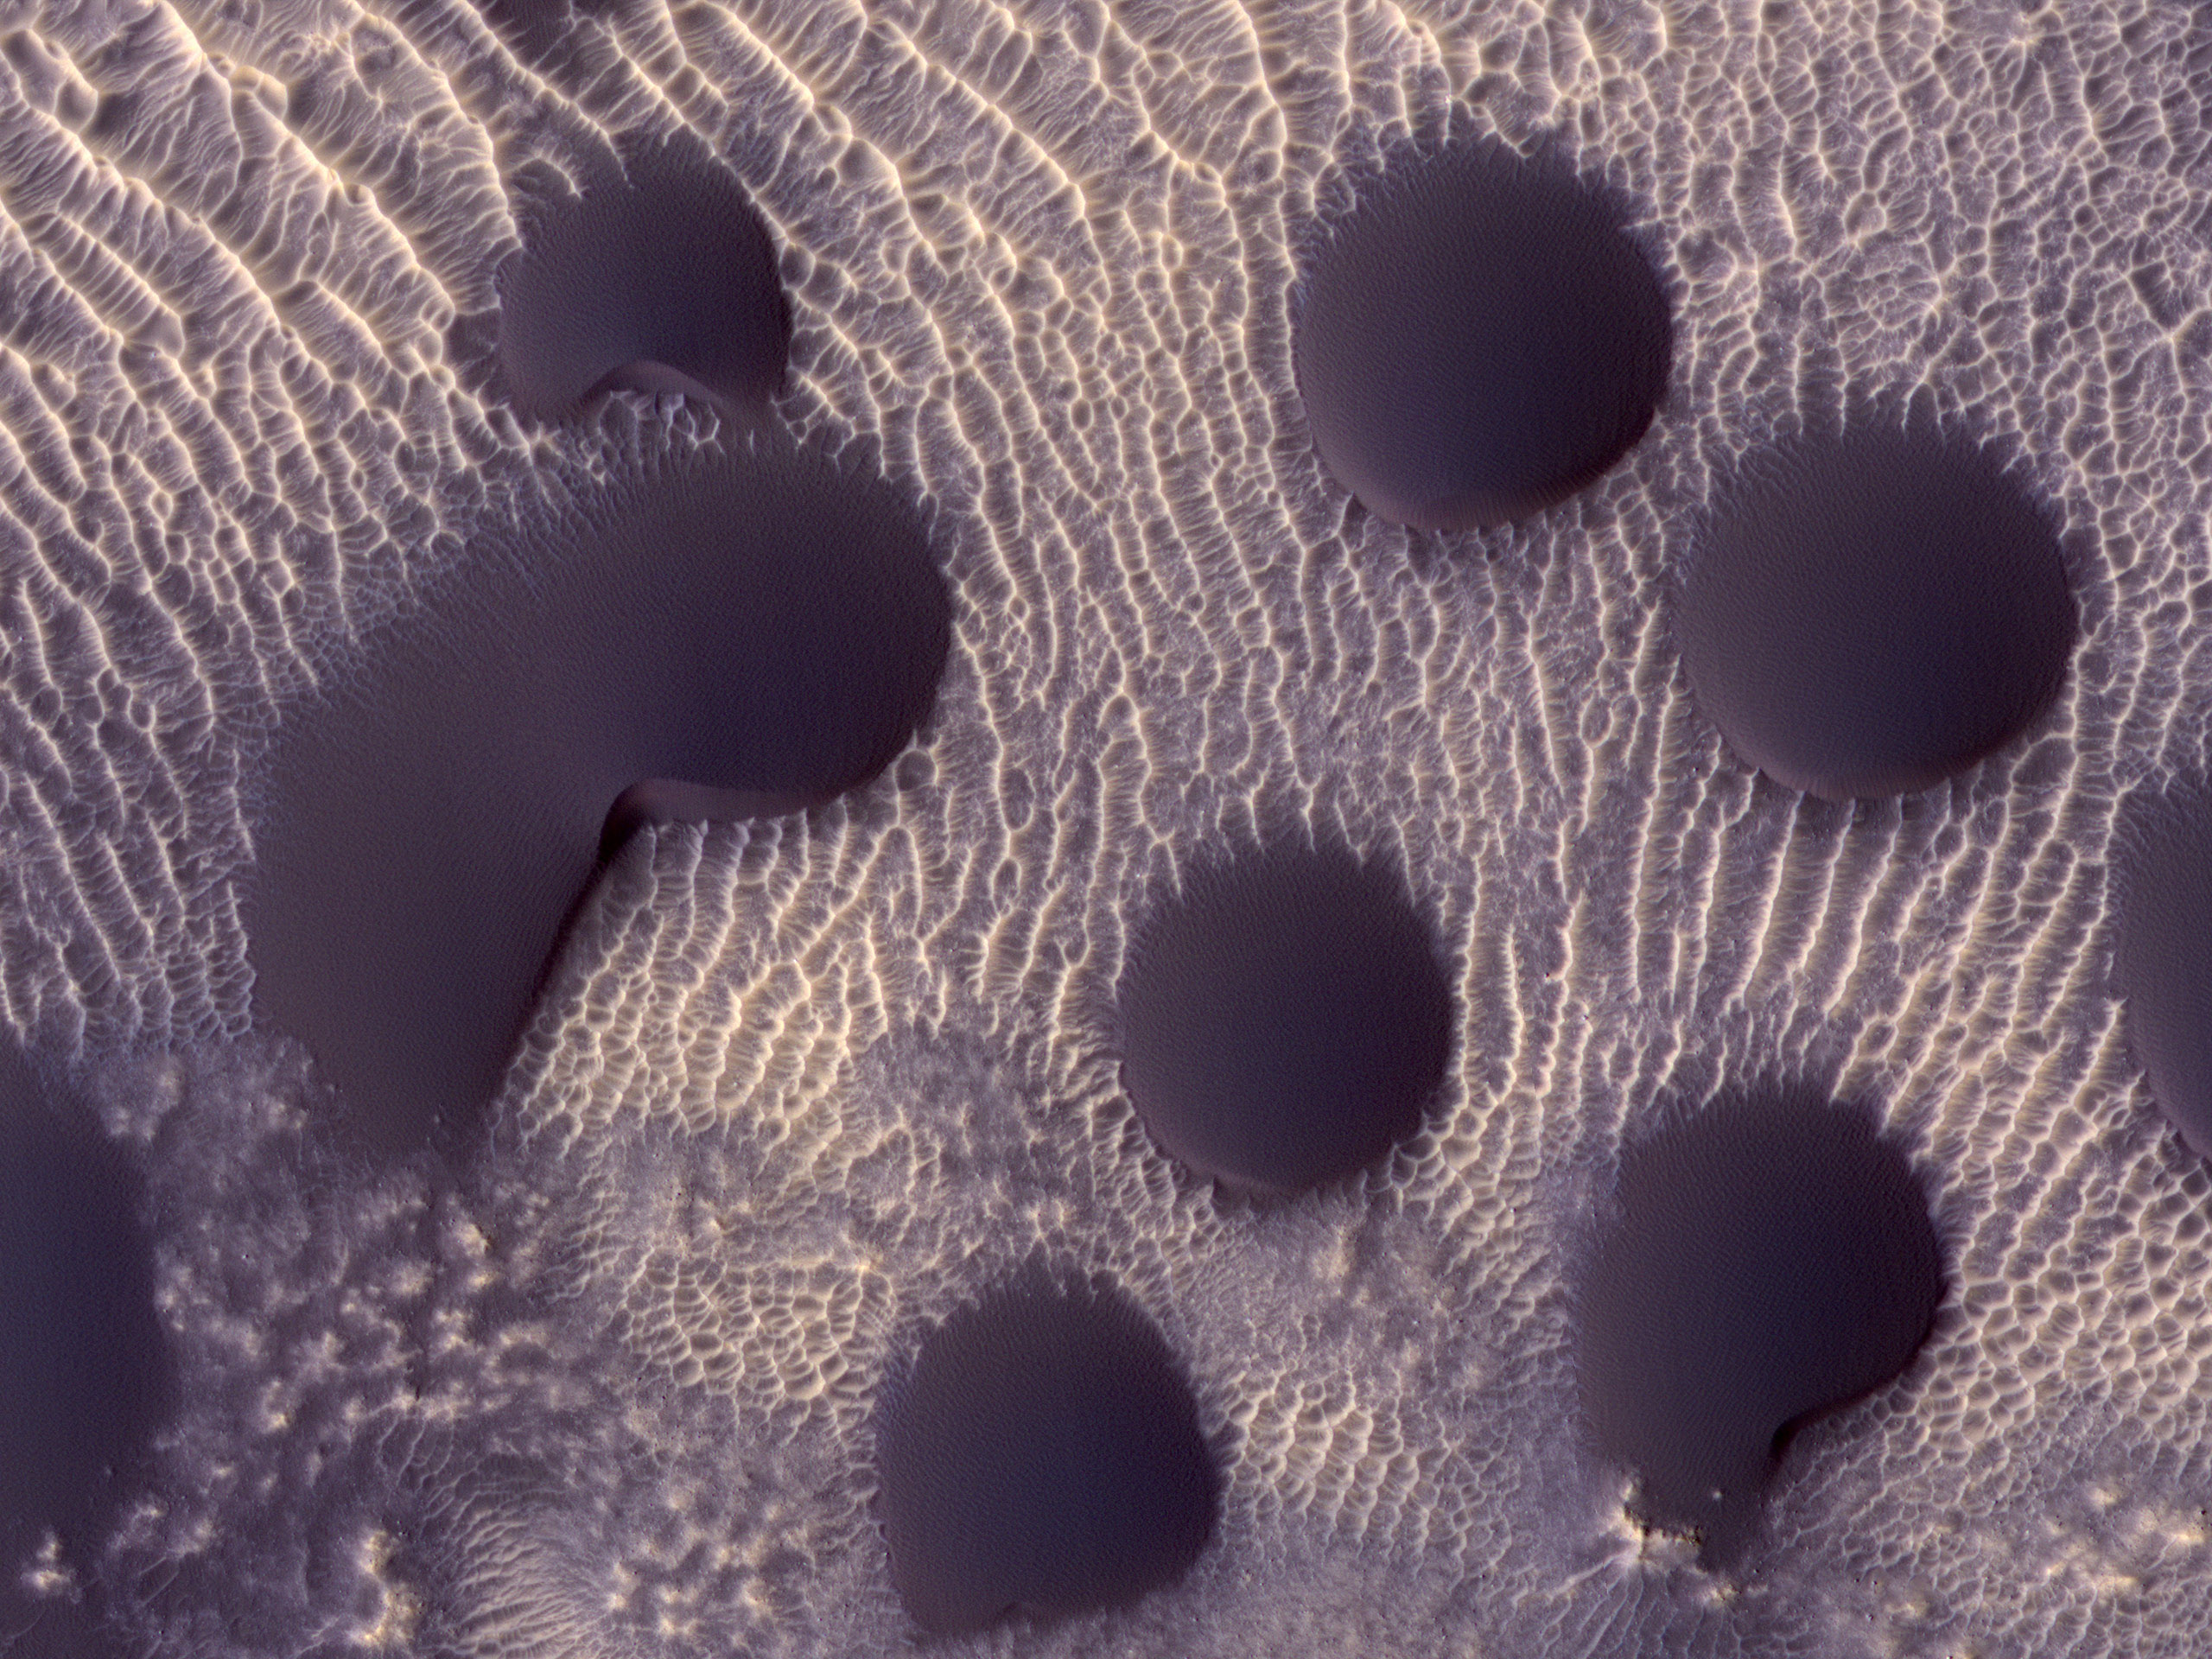 Dome Dunes on Mars